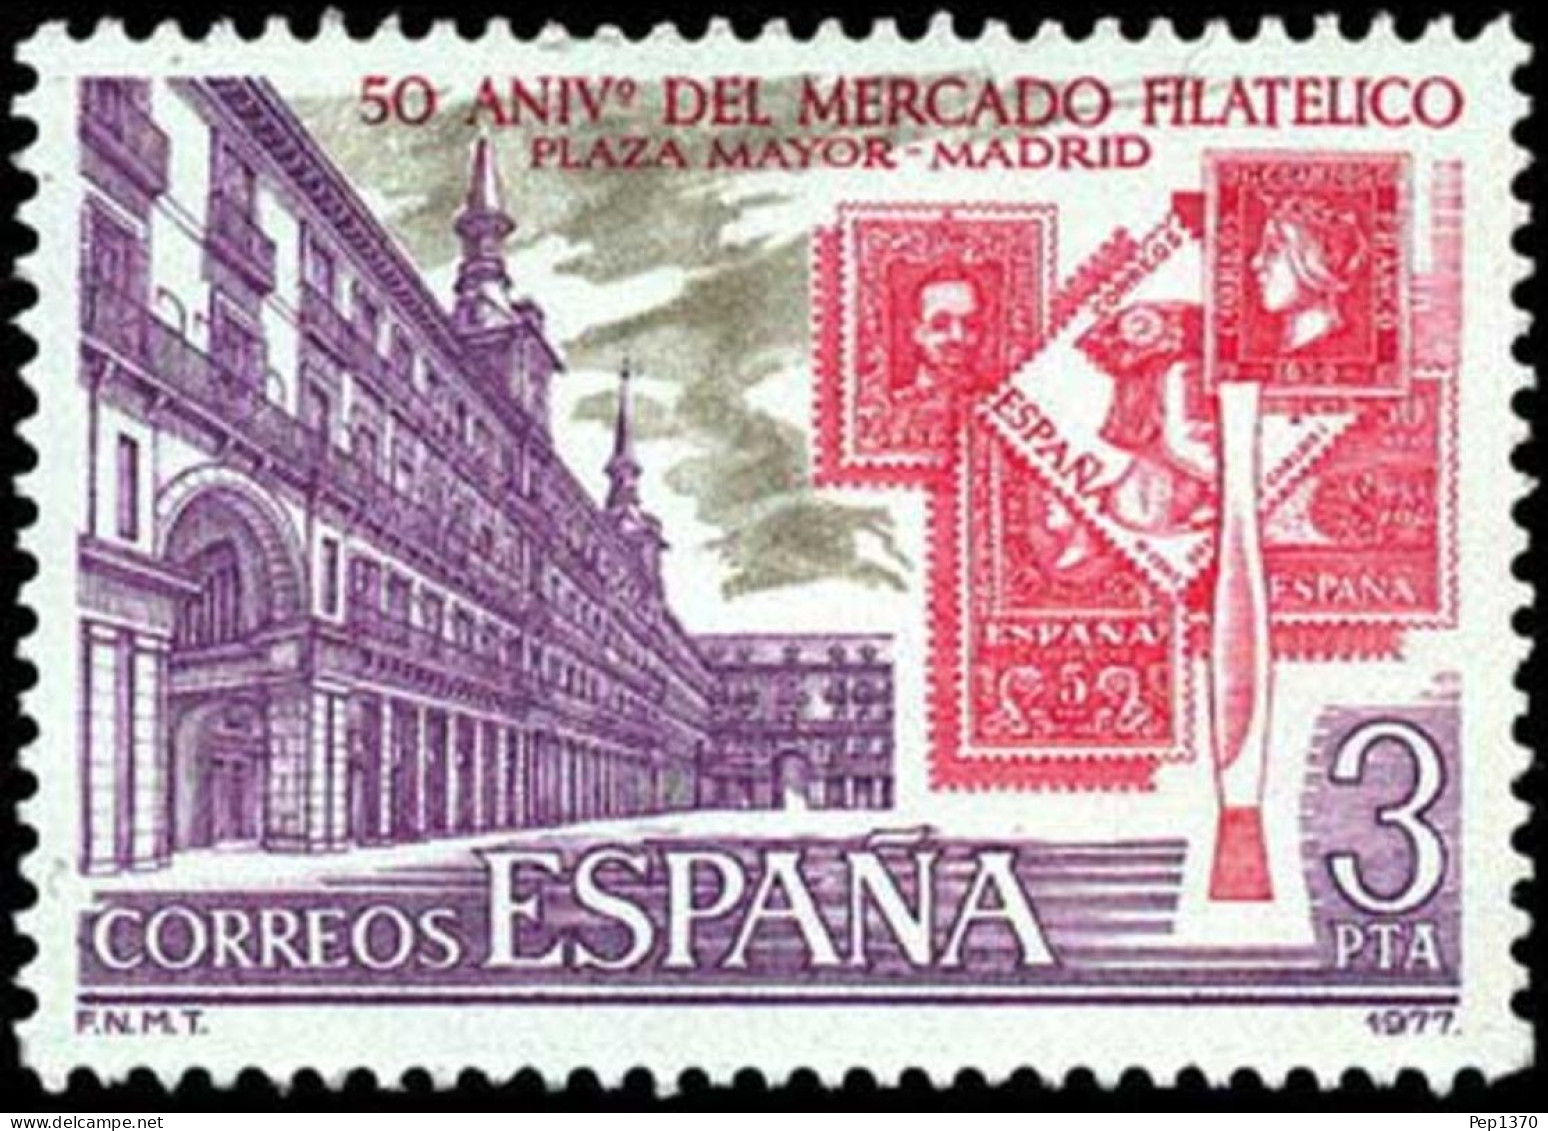 ESPAÑA 1977 - MERCADO FILATELICO DE LA PLAZA MAYOR DE MADRID - EDIFIL 2415** - Ongebruikt